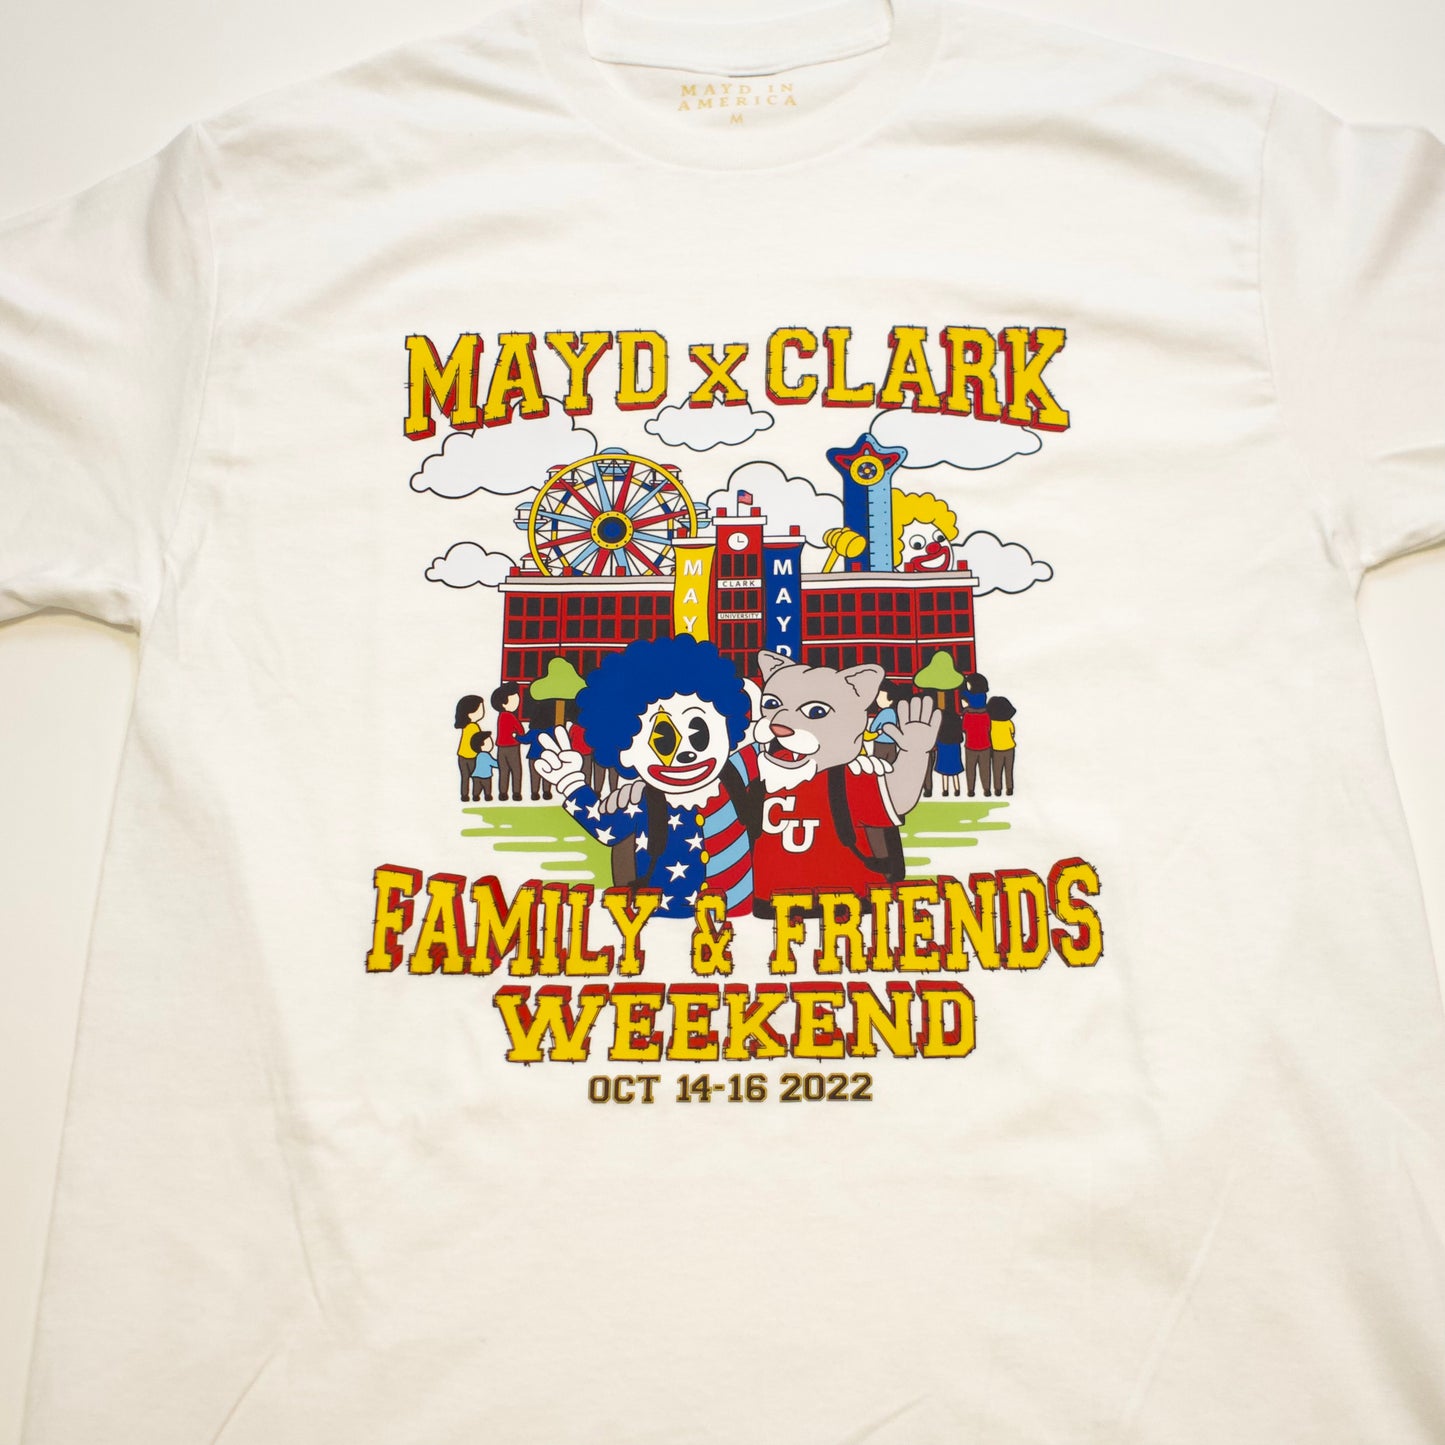 MAYD x CLARK Family & Friends Weekend T-shirt (MAYD x CLARK)